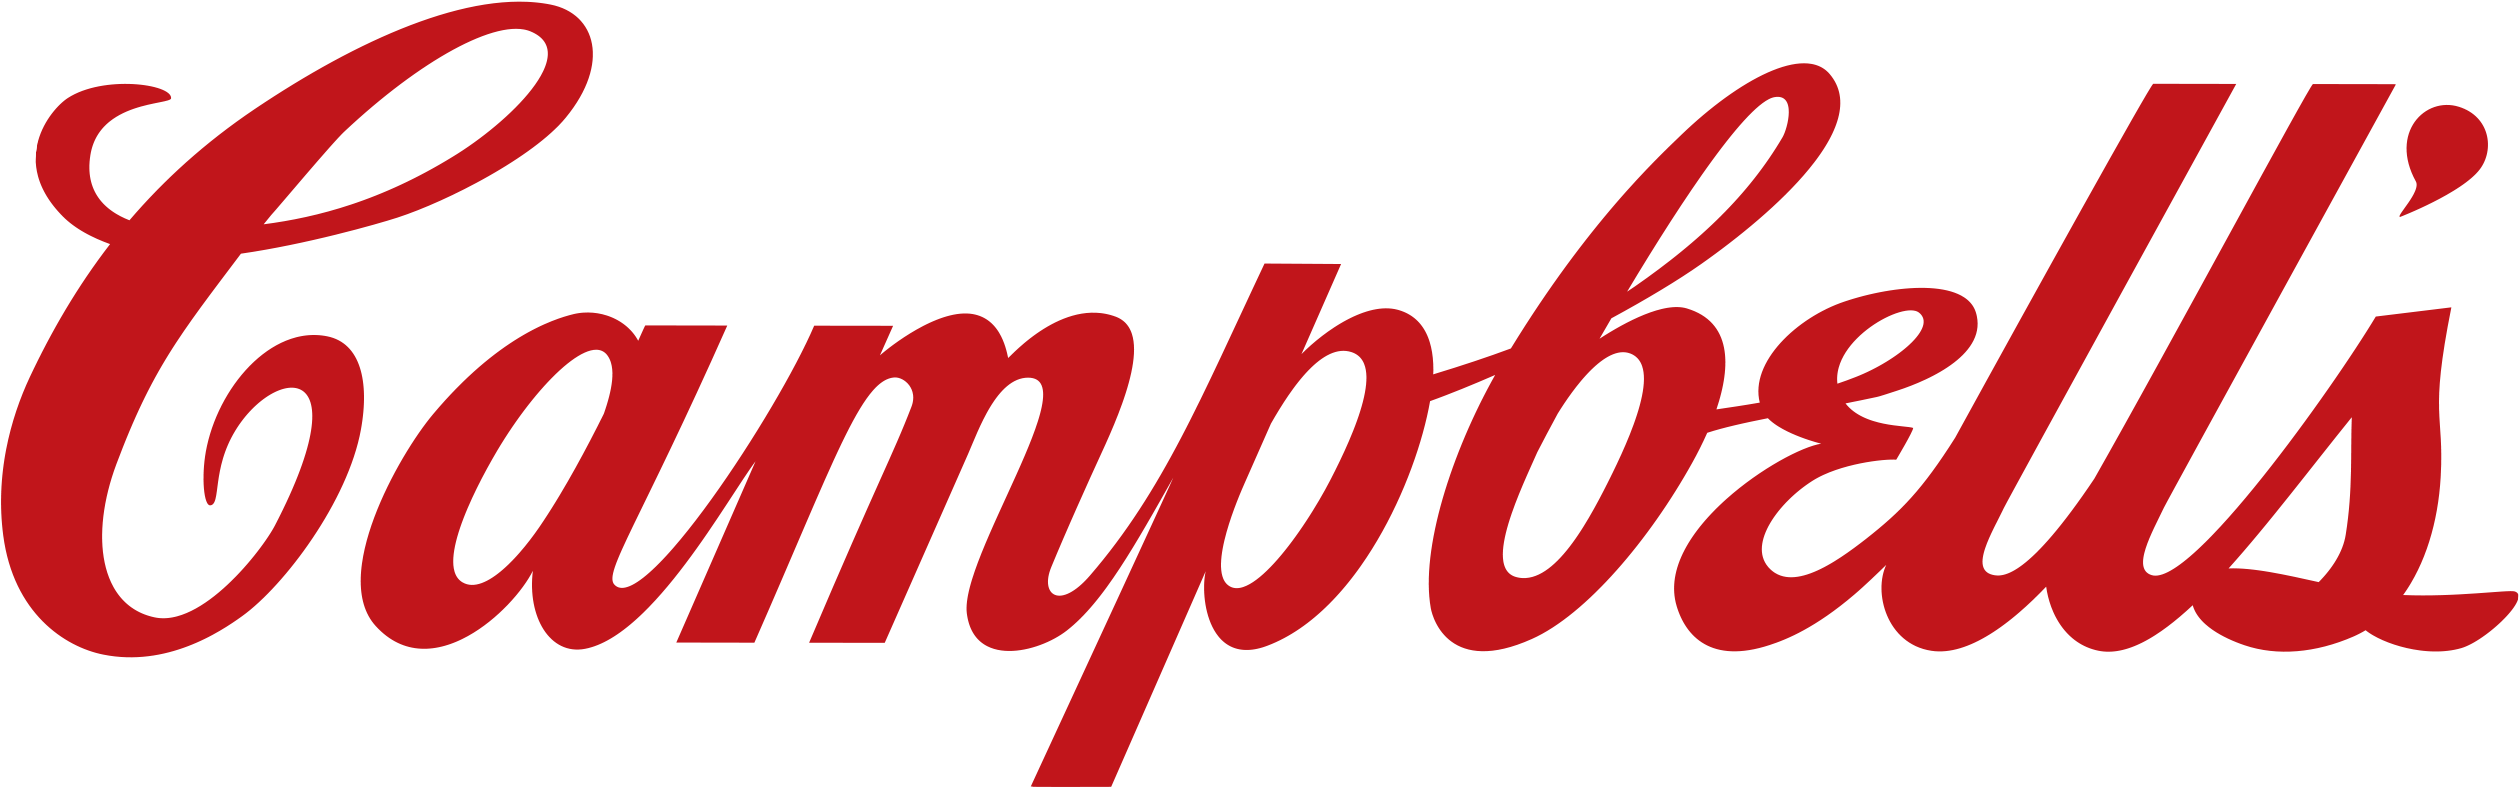 Campbell S Brand Logo Campbell Soup Company Rh Campbellsoupcompany - Campbell Company Of Canada (2550x2164)